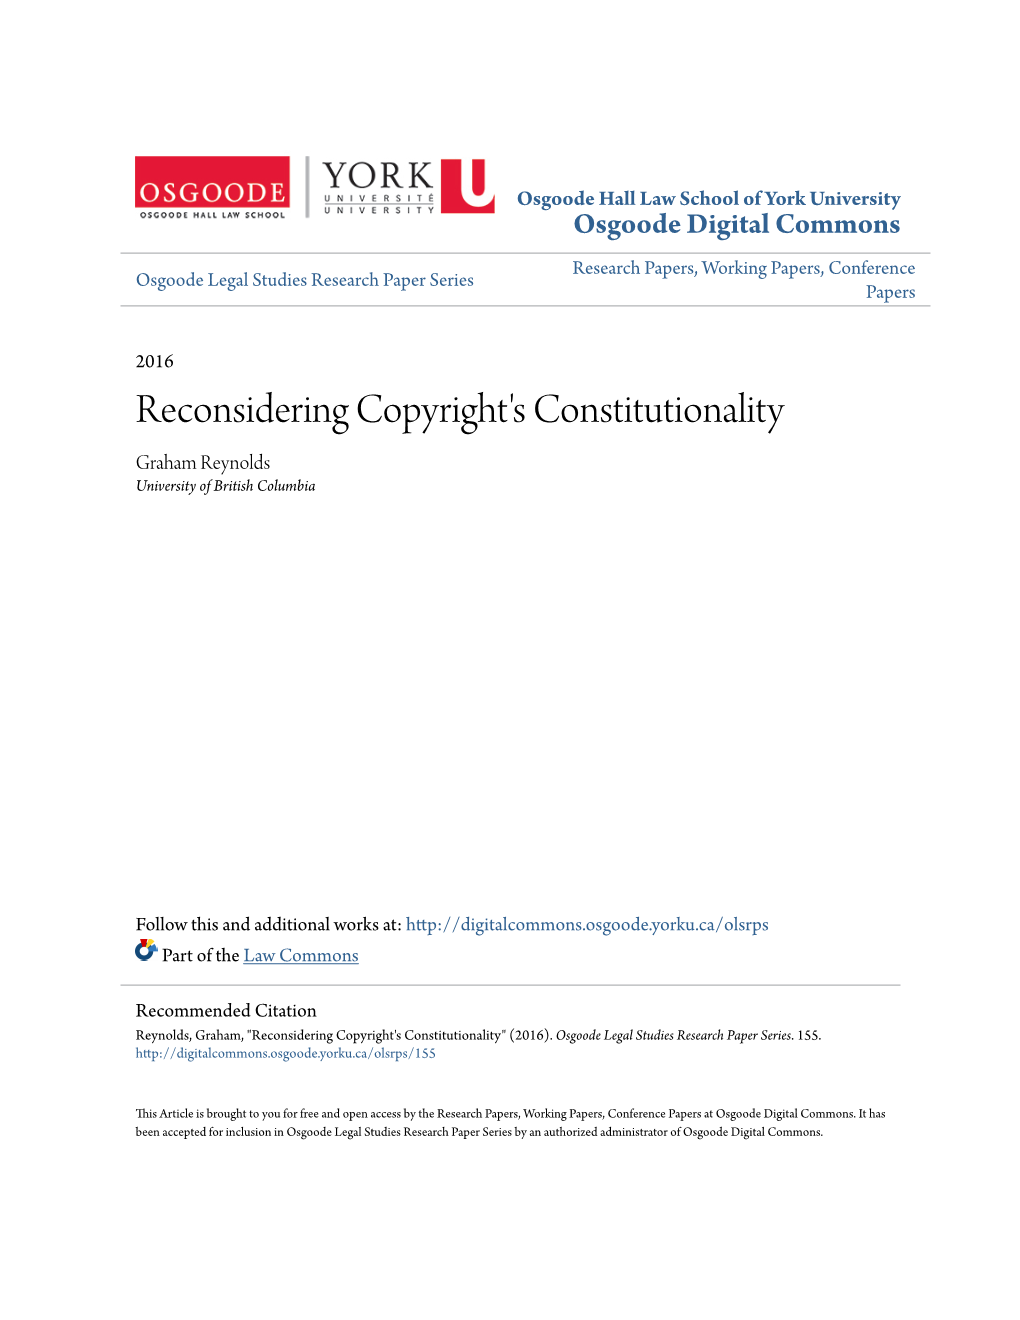 Reconsidering Copyright's Constitutionality Graham Reynolds University of British Columbia